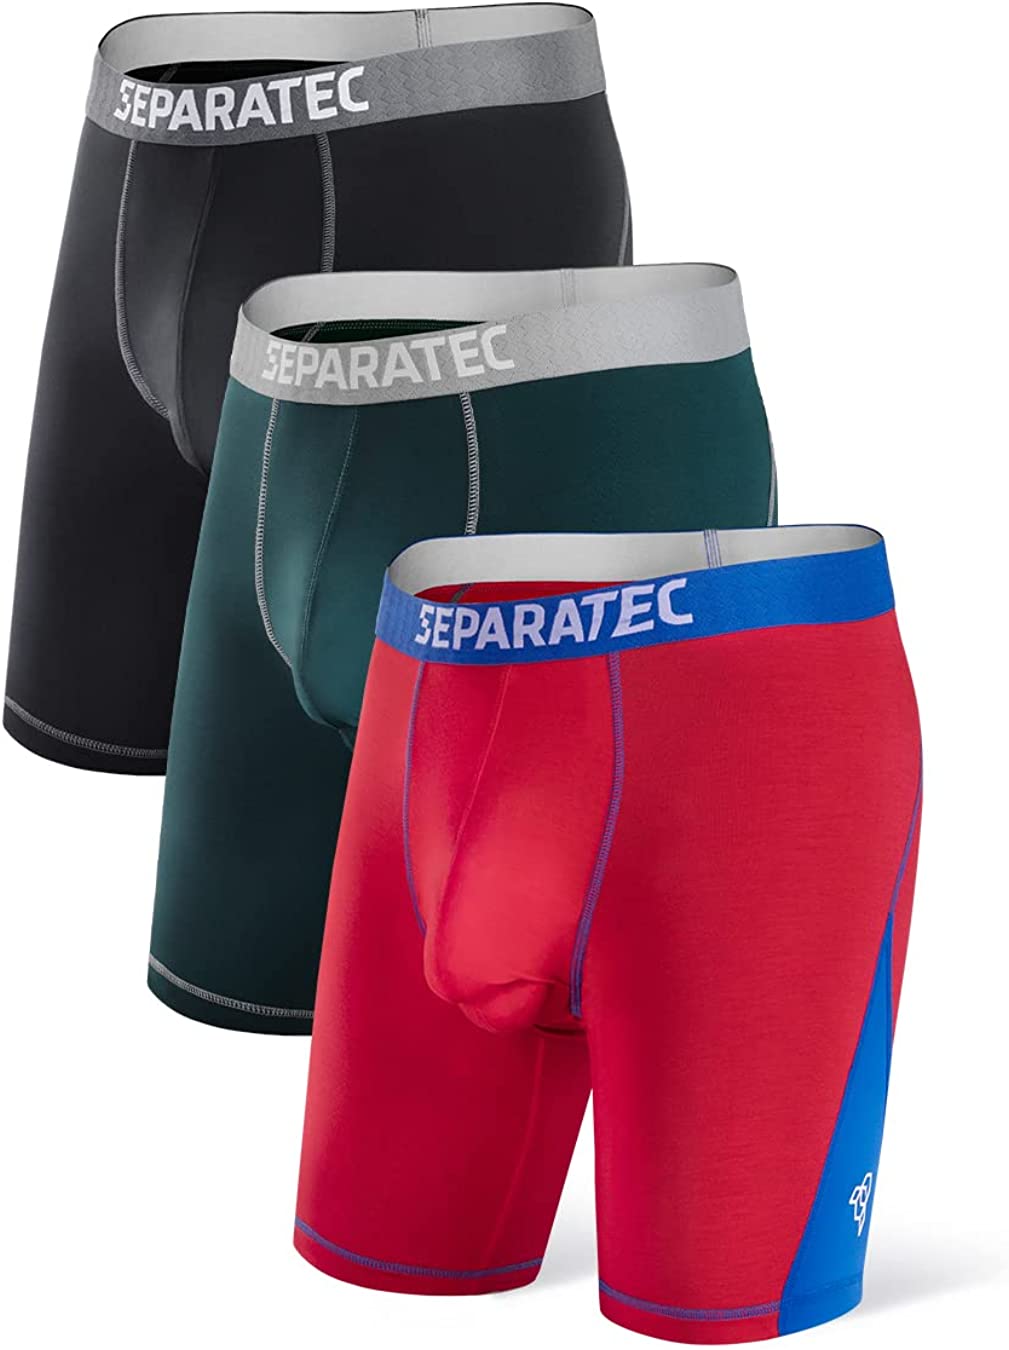 Separatec Men's Underwear long leg Active Sport Cool Dry